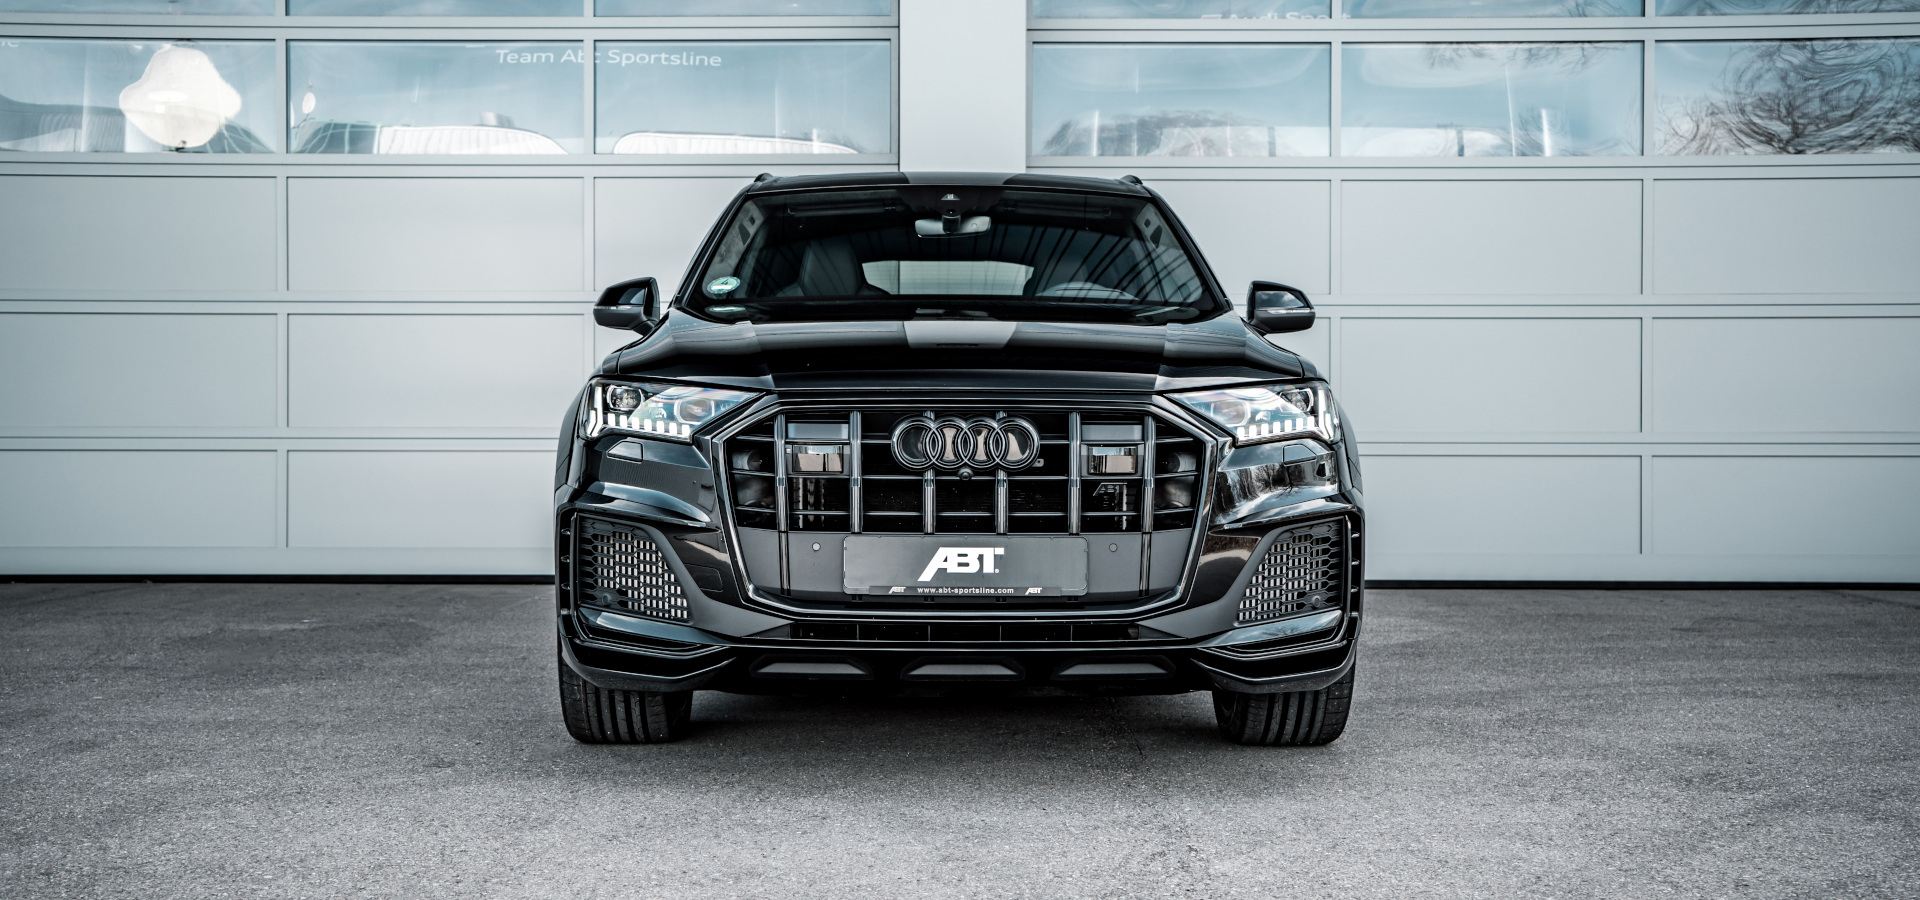 Audi A1 - Audi Tuning, VW Tuning, Chiptuning von ABT Sportsline.